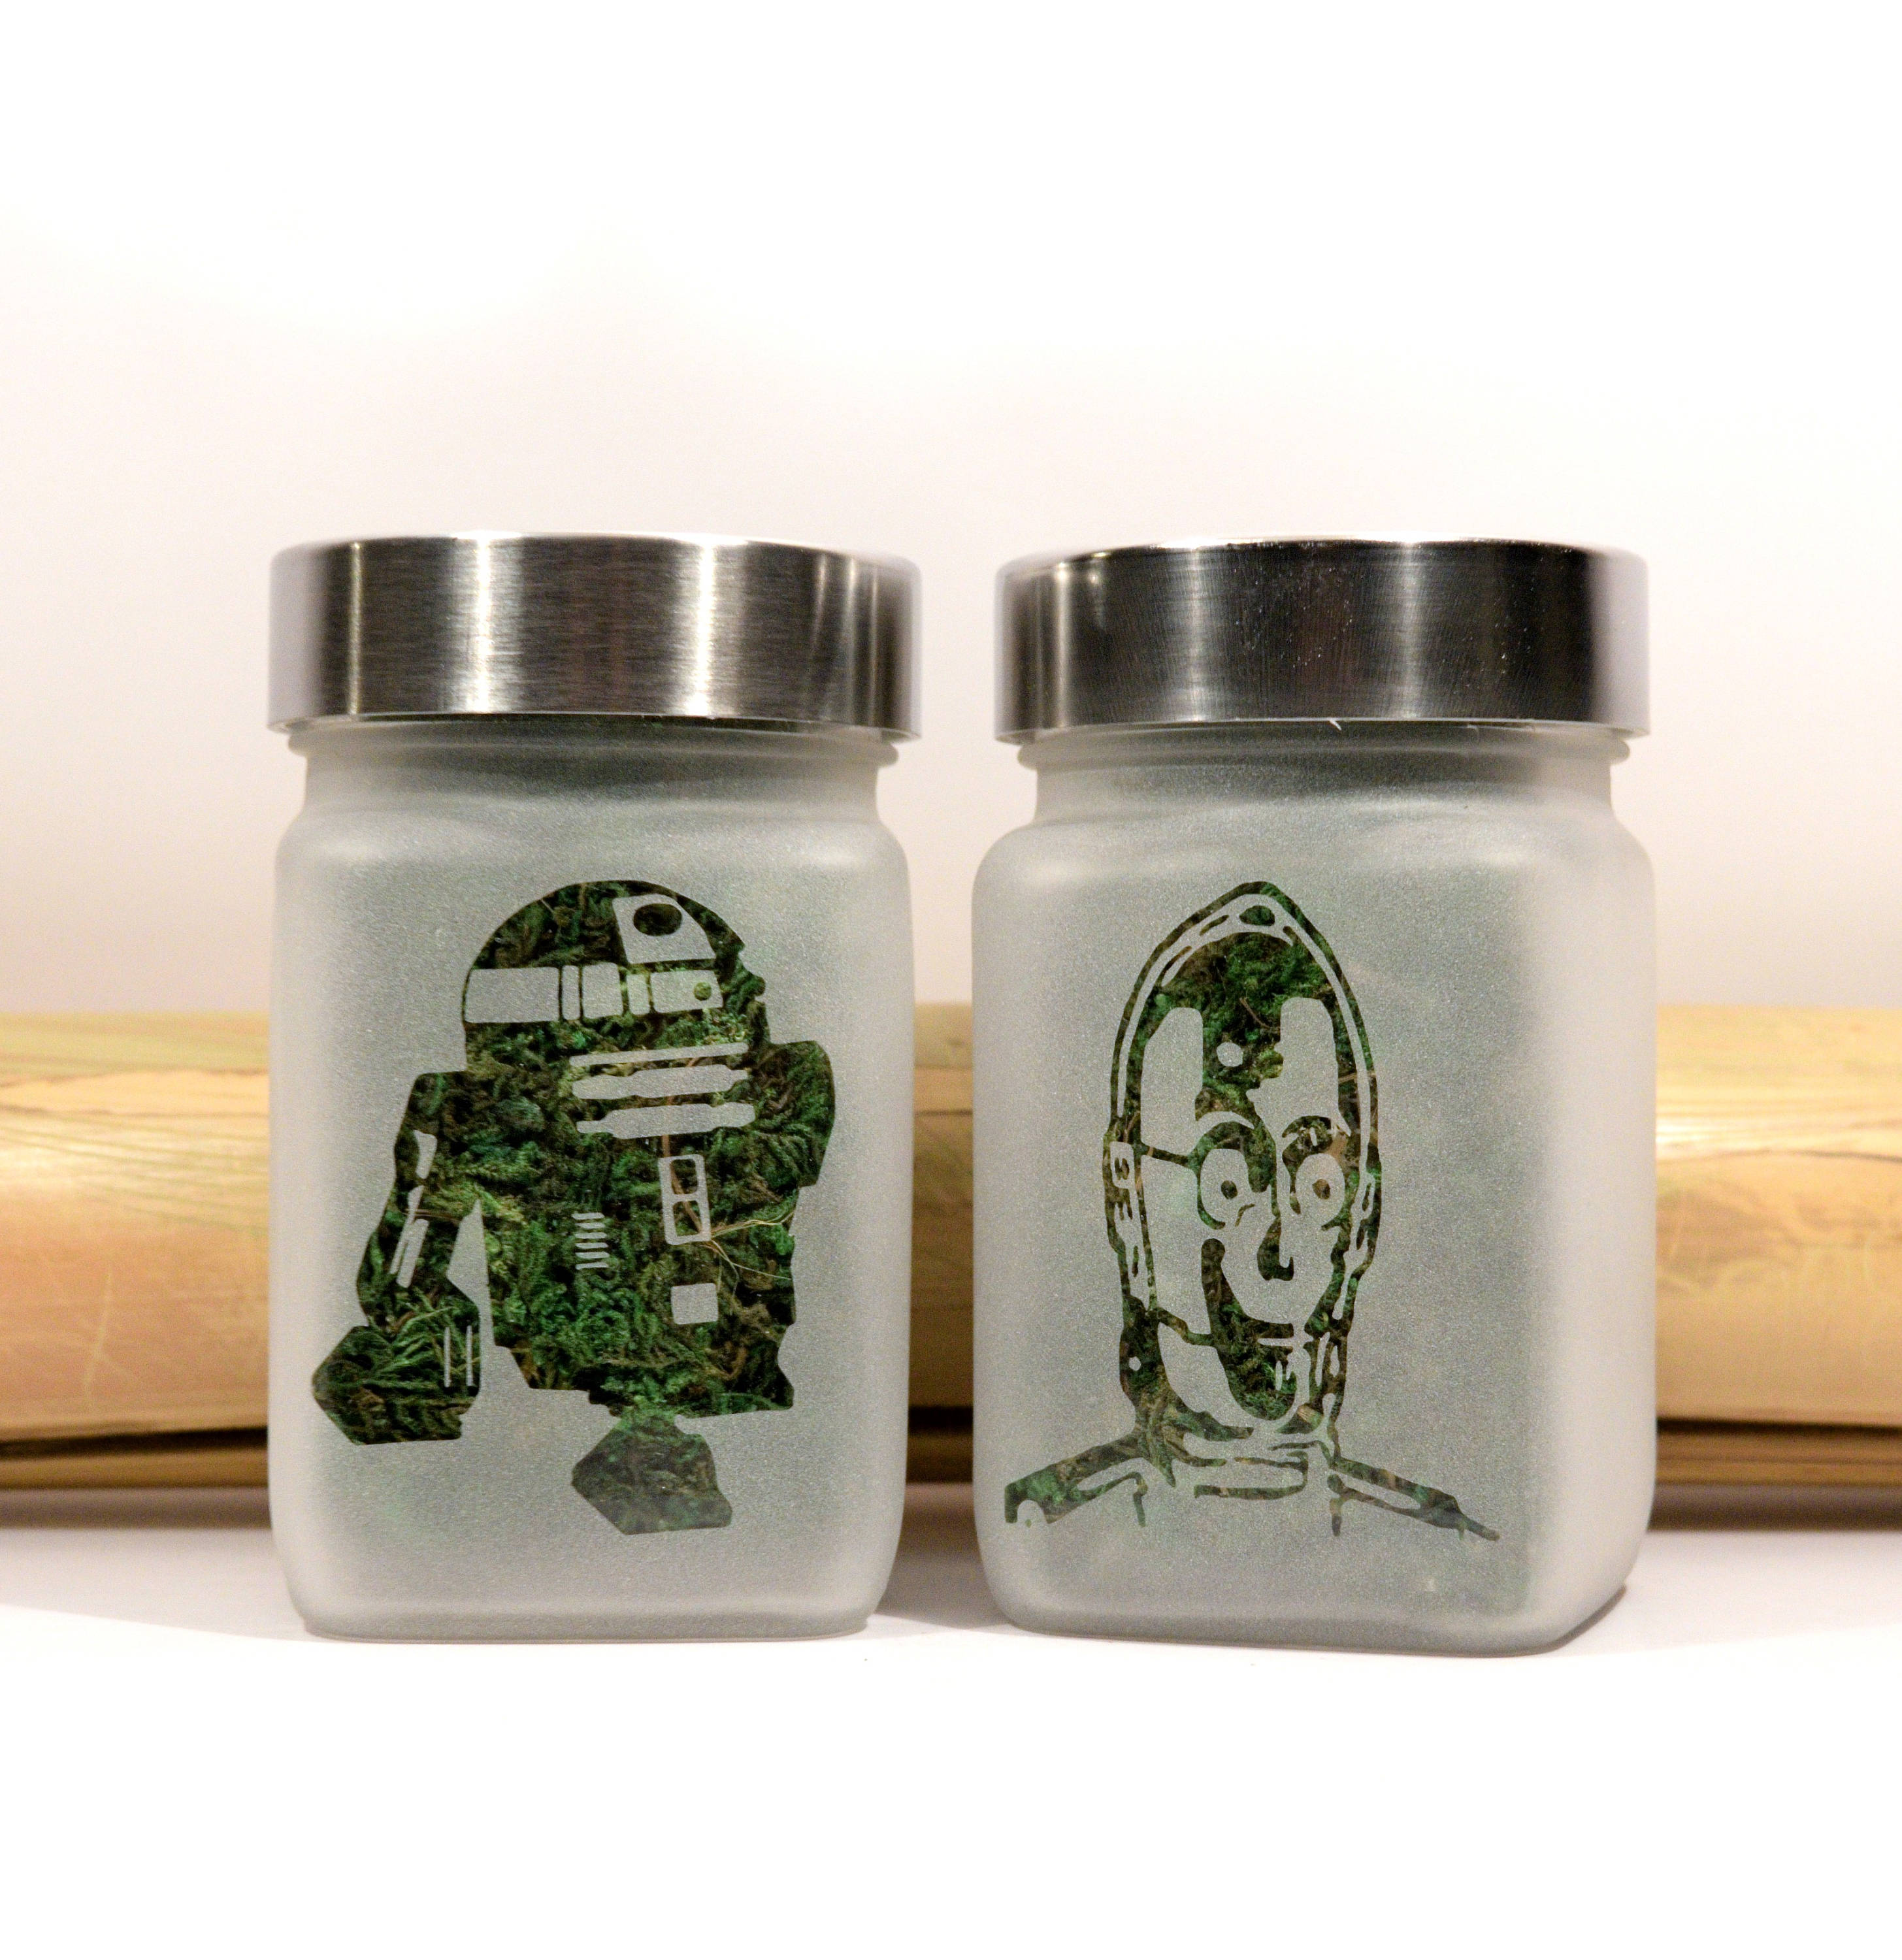 Star Wars Inspired Gift Set of 2 Stash Jars - 420 Weed Jars, The Droids